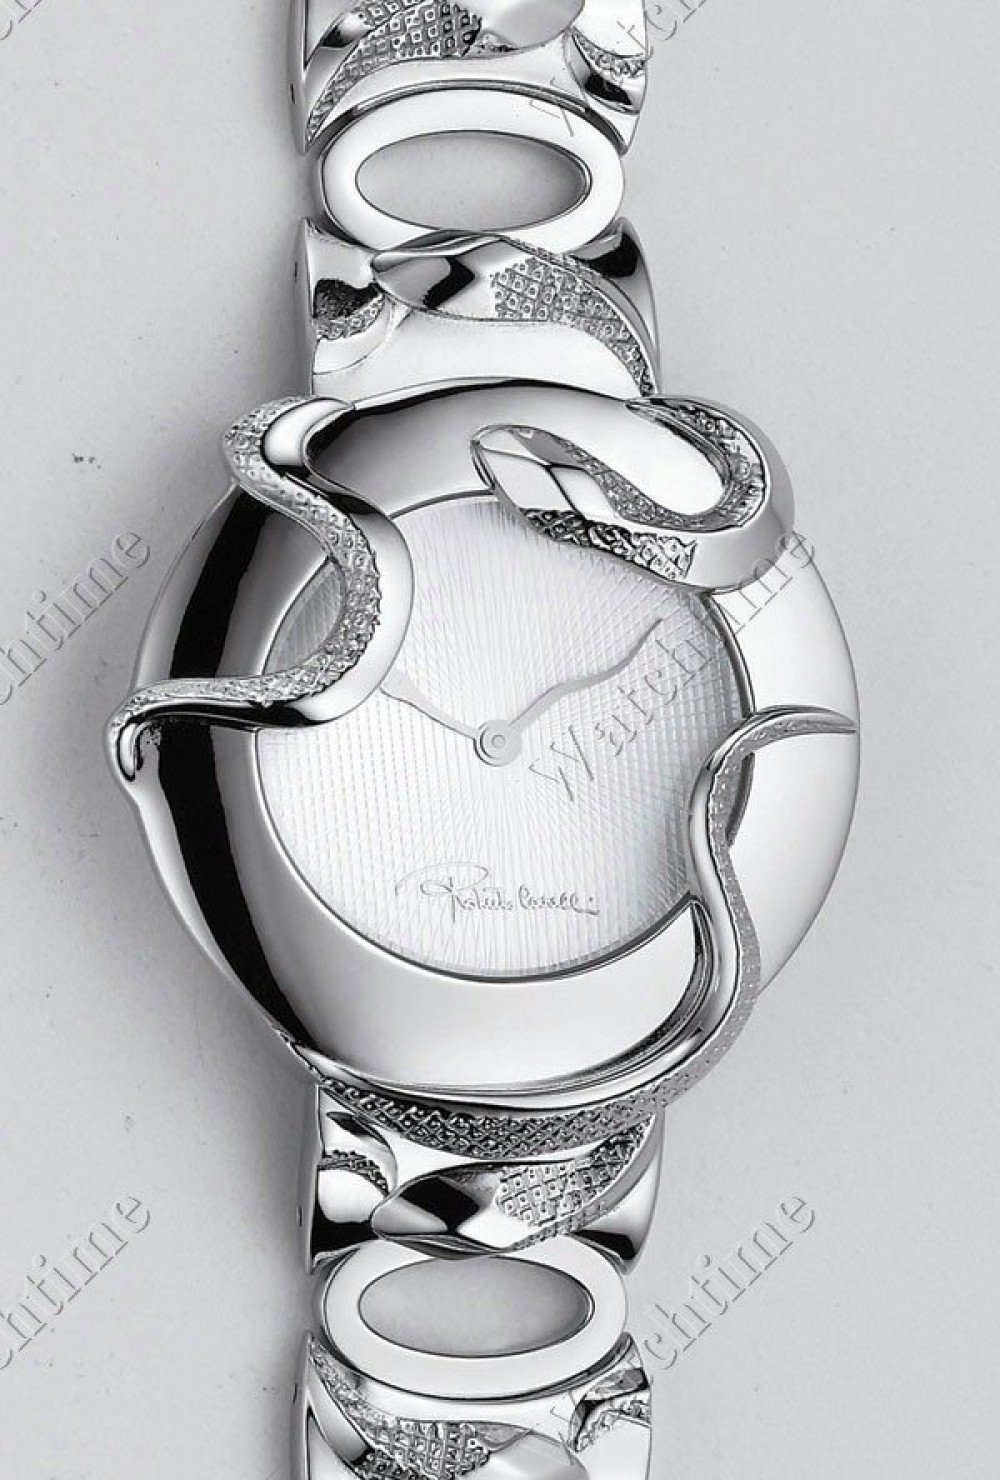 Zegarek firmy Roberto Cavalli Timewear, model Snake